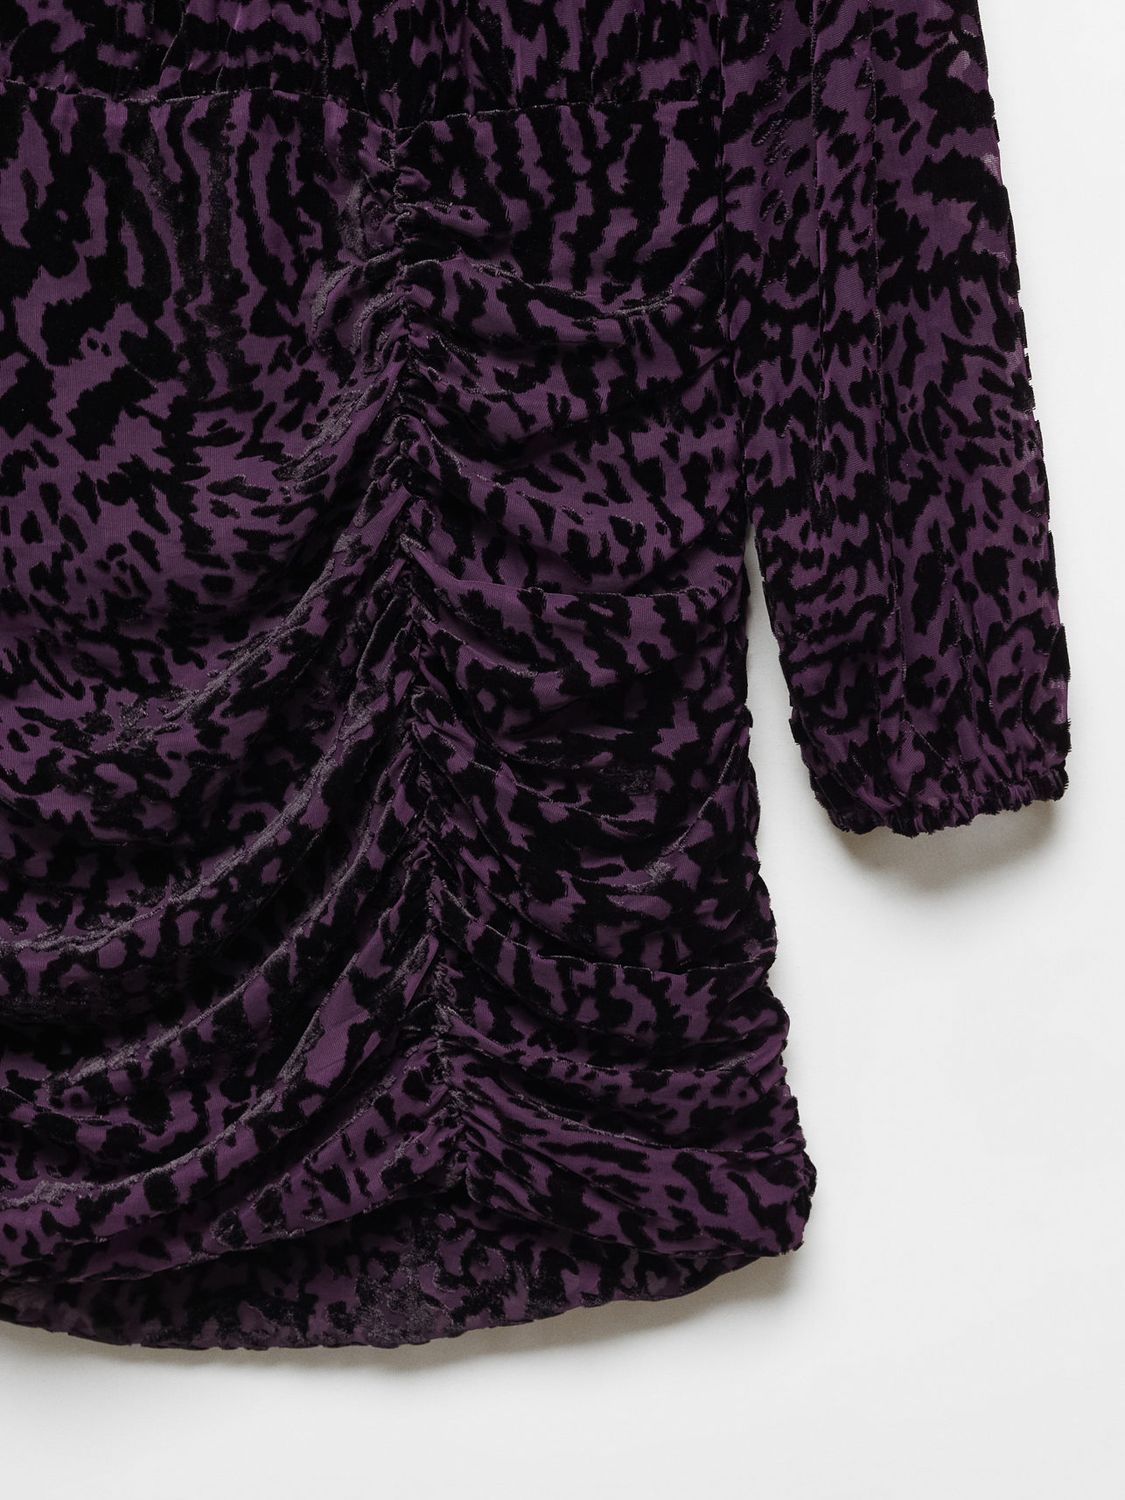 Buy Mango Debora Semi Transparent Velvet Mini Dress, Black Online at johnlewis.com